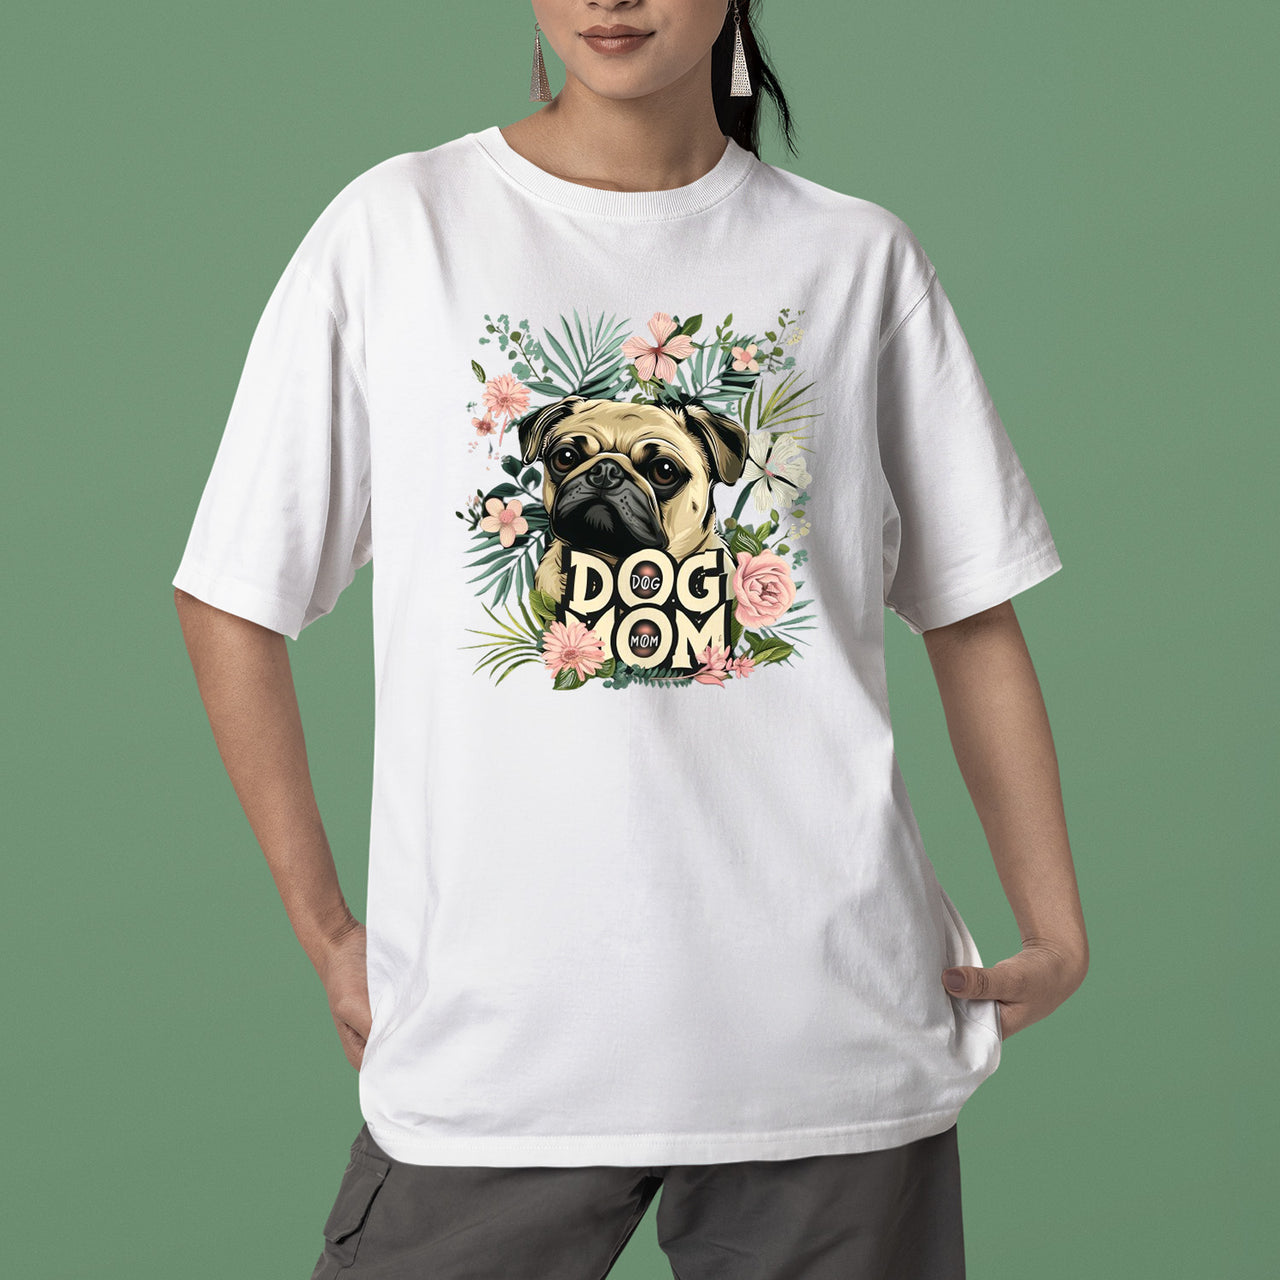 Pug Dog T-shirt, Pet Lover Shirt, Dog Lover Shirt, Dog Mom T-Shirt, Dog Owner Shirt, Gift For Dog Mom, Funny Dog Shirts, Women Dog T-Shirt, Mother's Day Gift, Dog Lover Wife Gifts, Dog Shirt